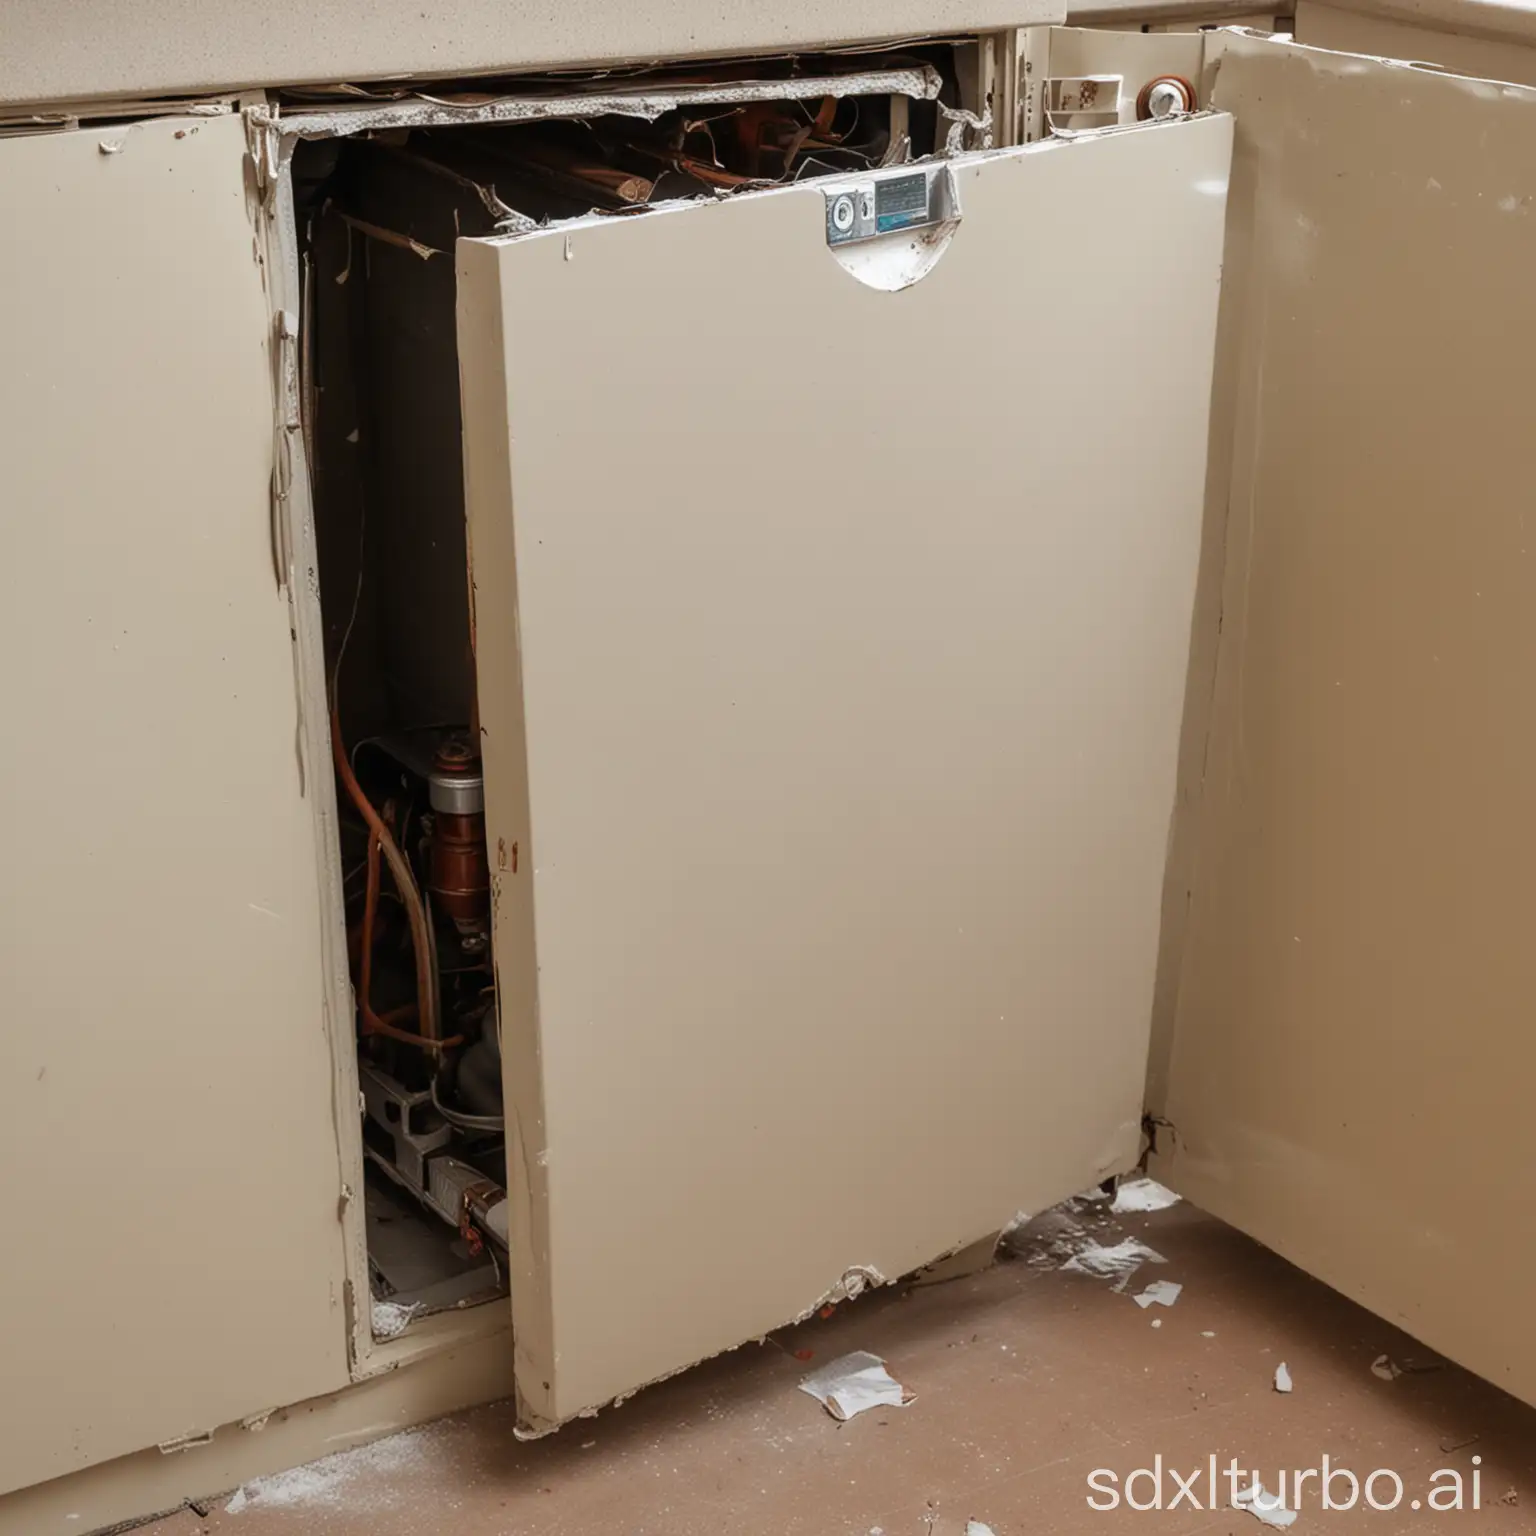 Broken-Boiler-Hidden-in-a-Cupboard-Maintenance-Woes-Uncovered